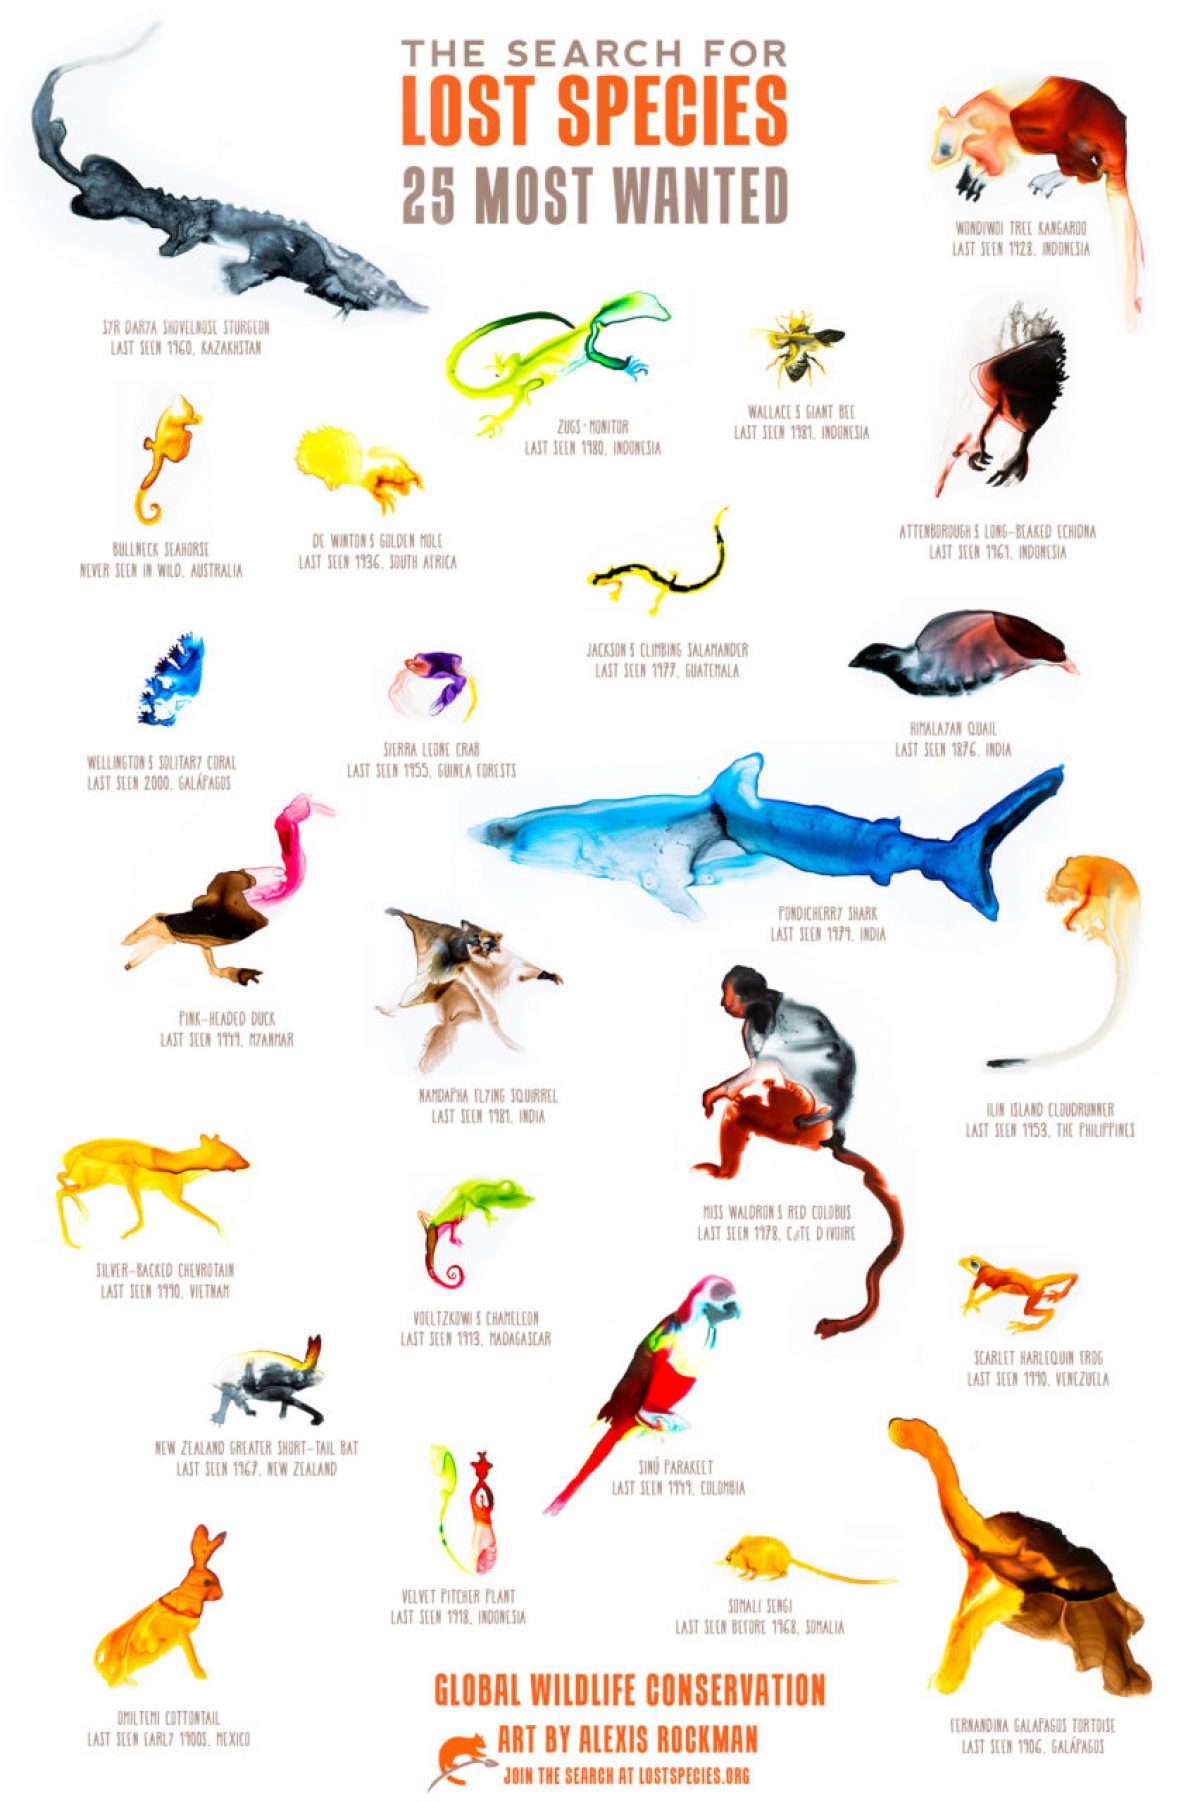 Top 25 Lost Species